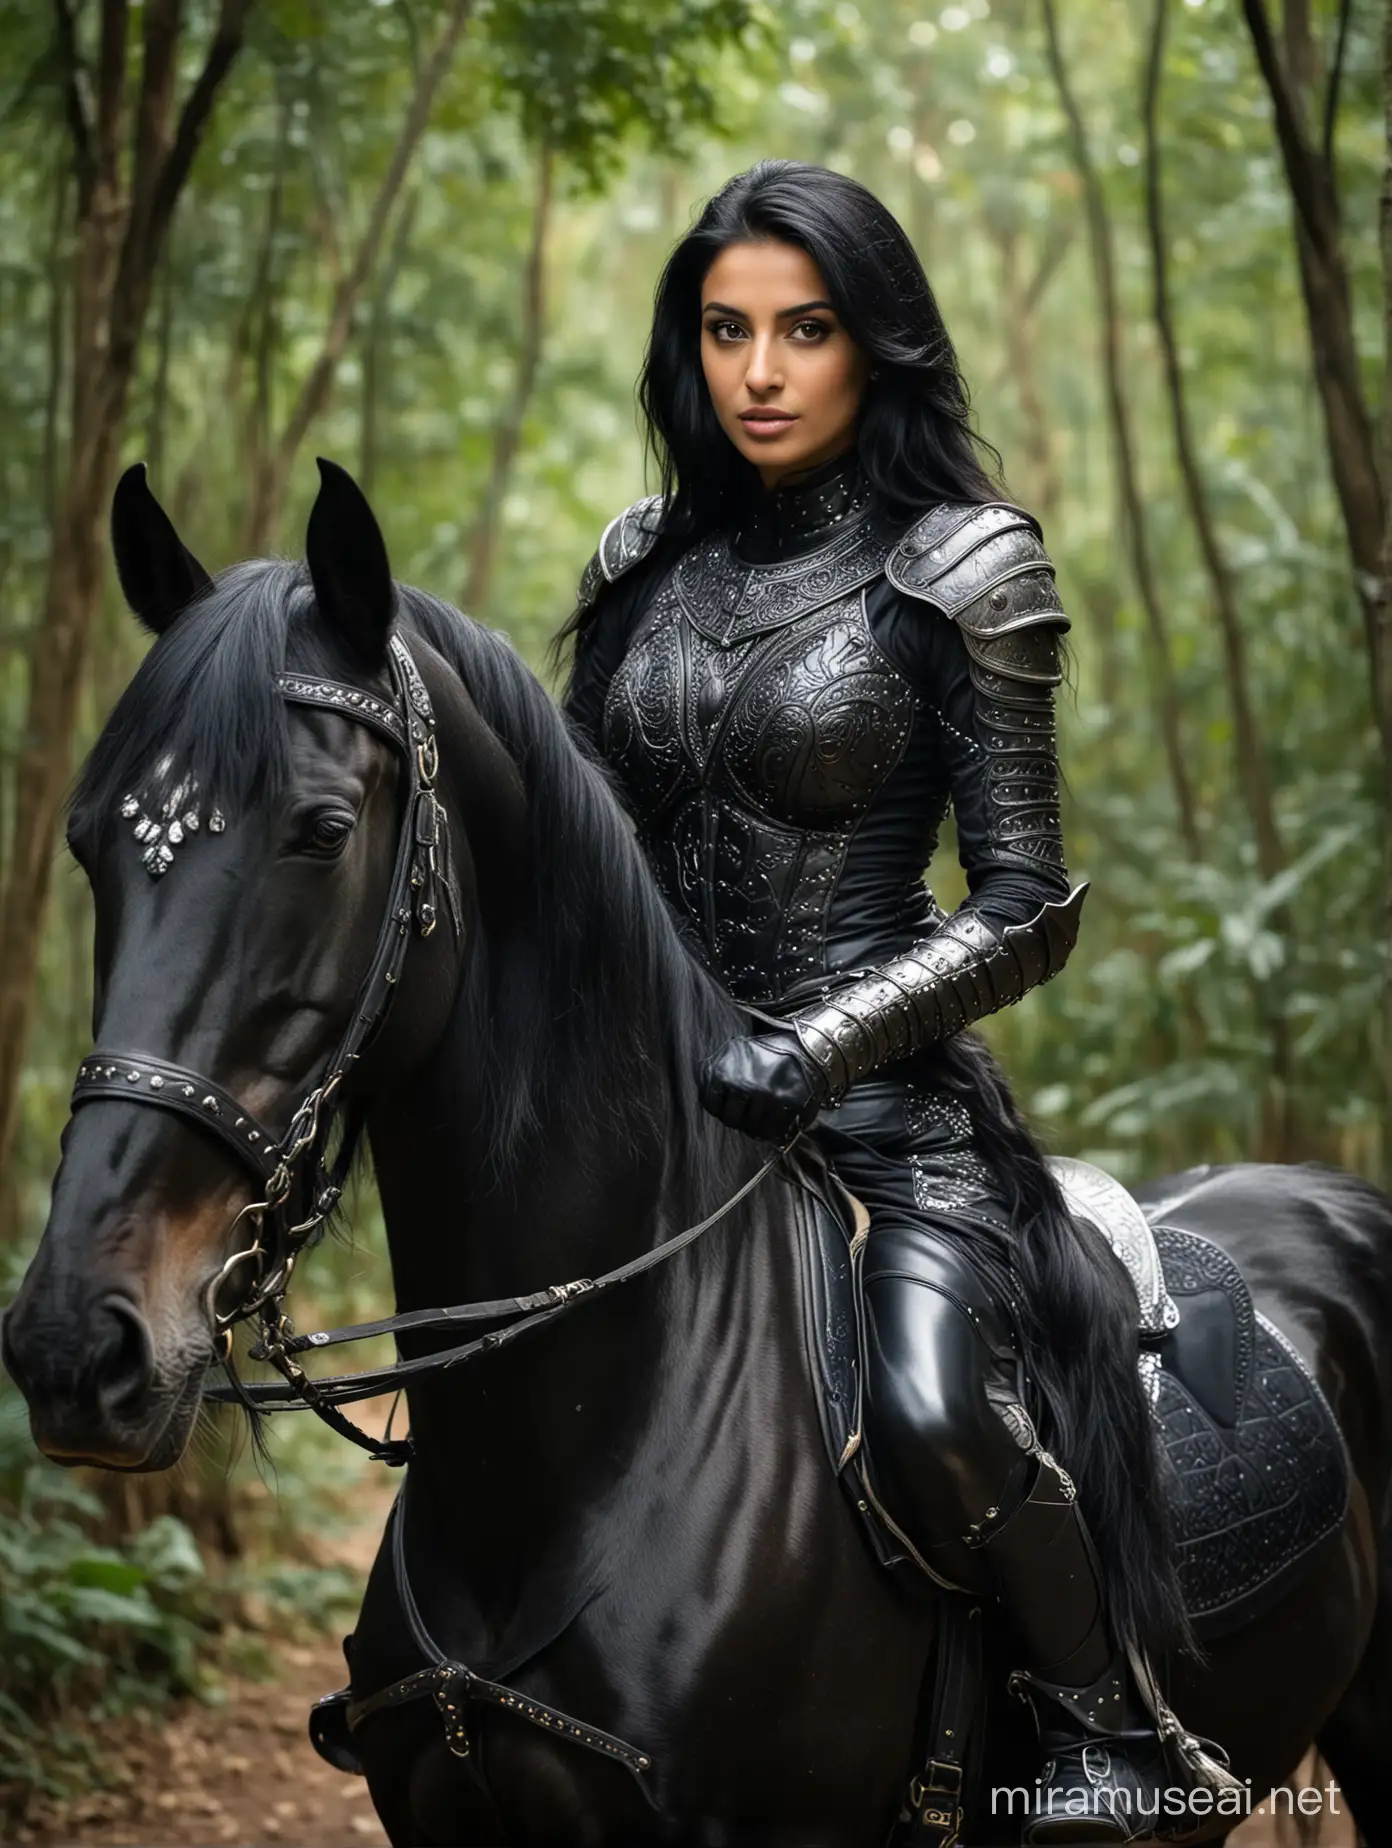 Stunning Arab Knight Maiden Riding Black Horse in Lush Indian Rainforest